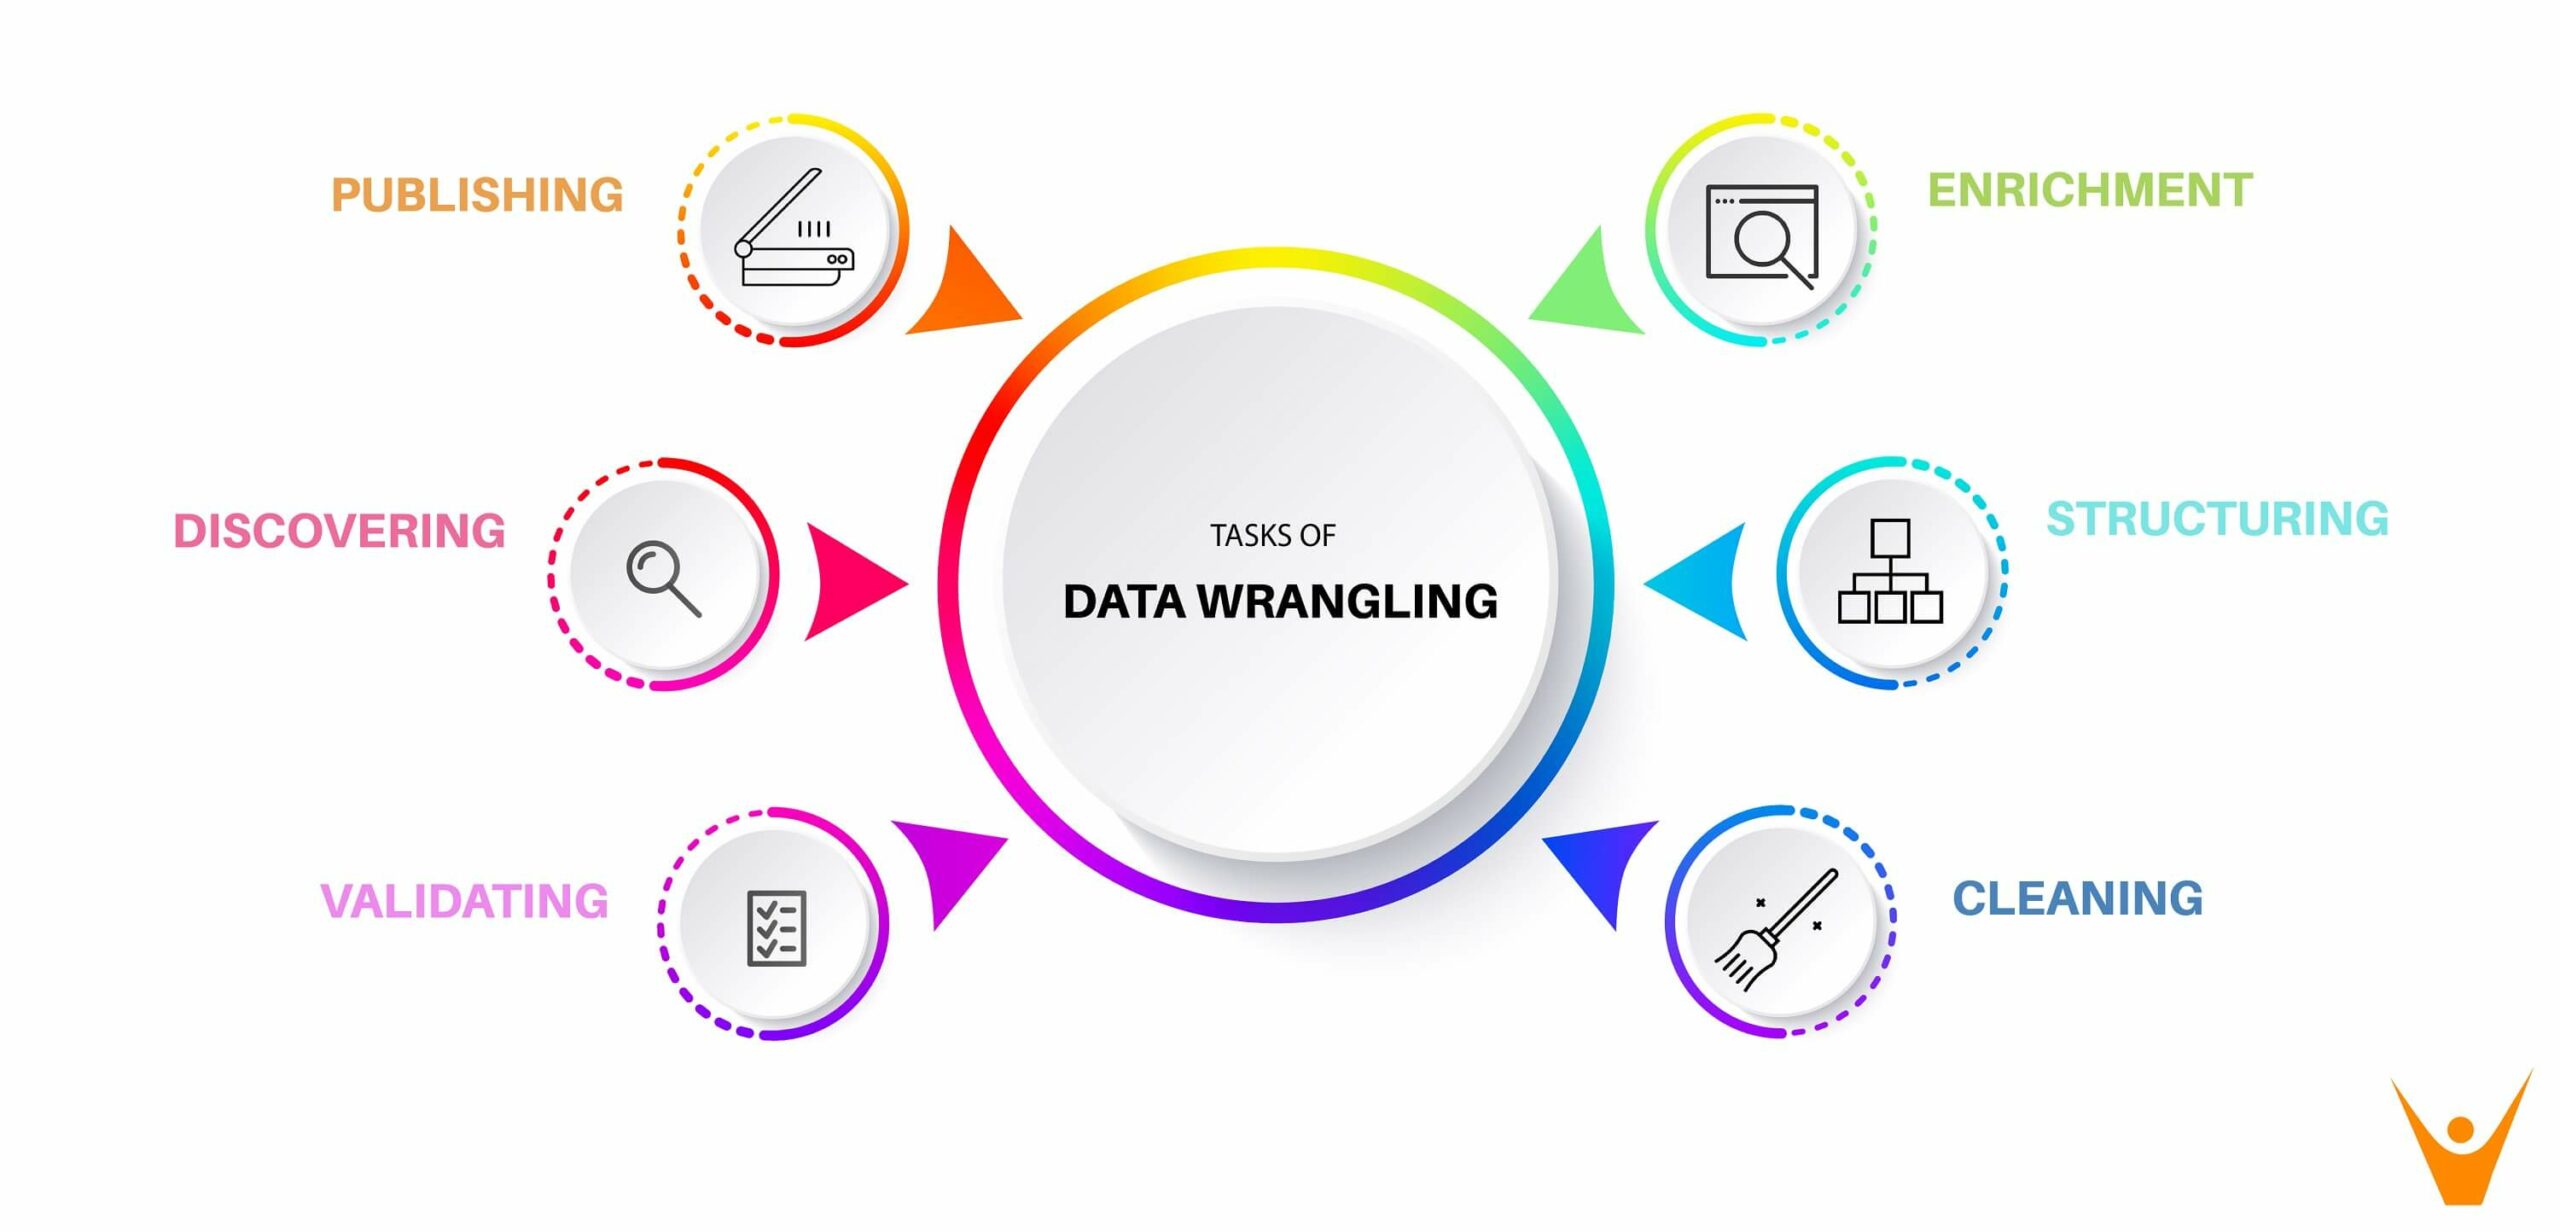 Data wrangling